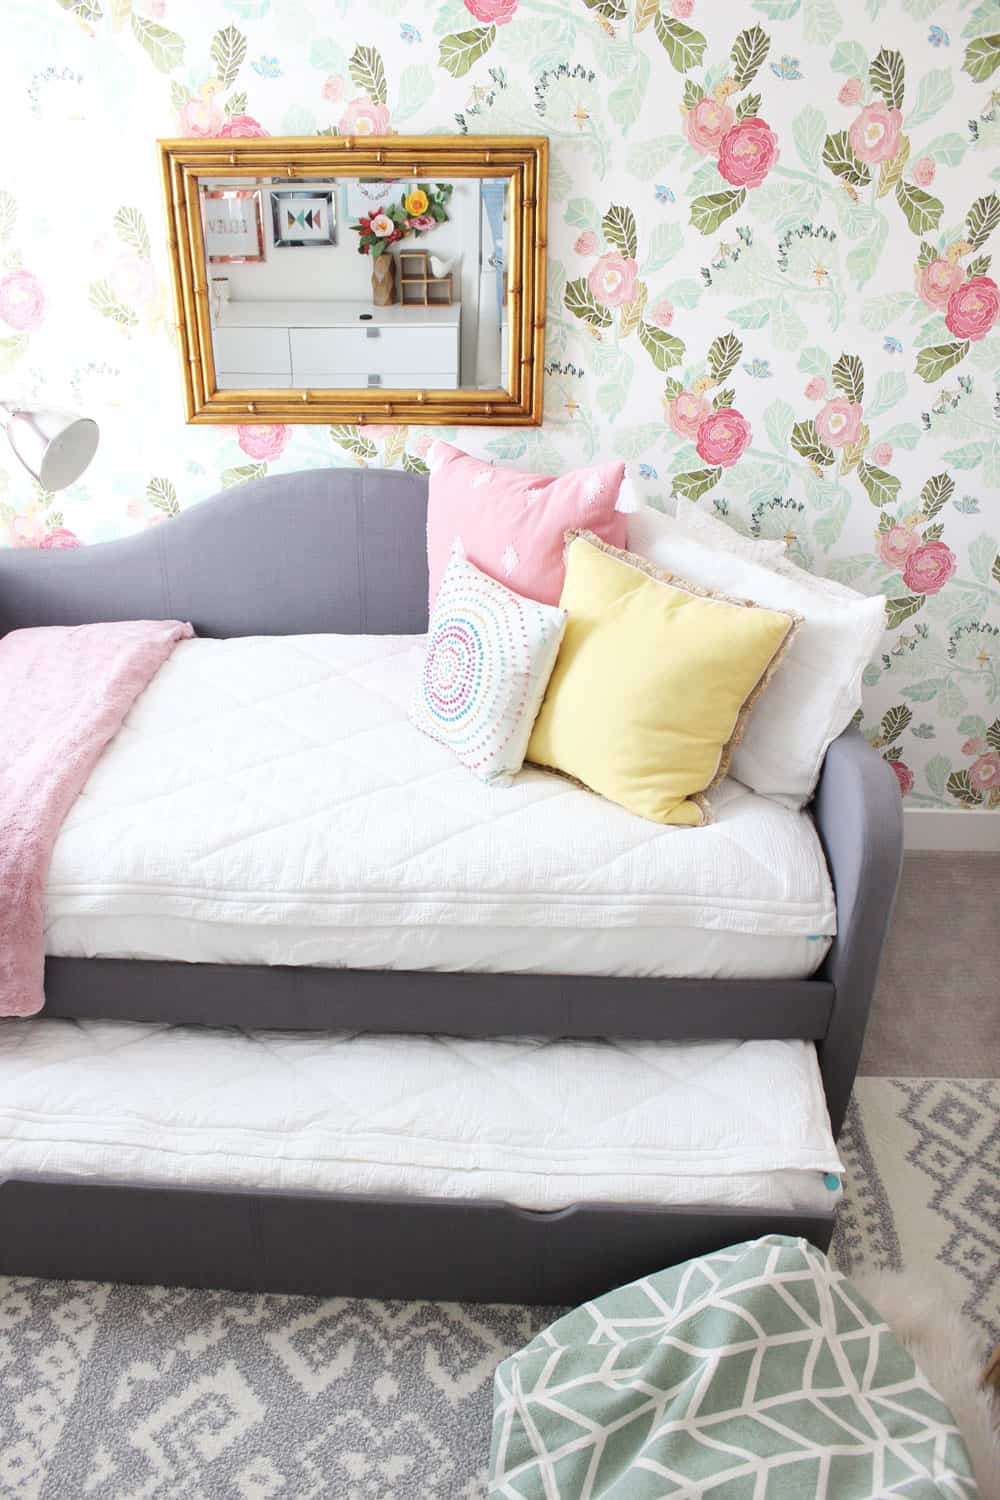 Romantic Pink Wallpaper For Bedroom  Girls Room Wall Mural Wallpapers Cute  3D  eBay